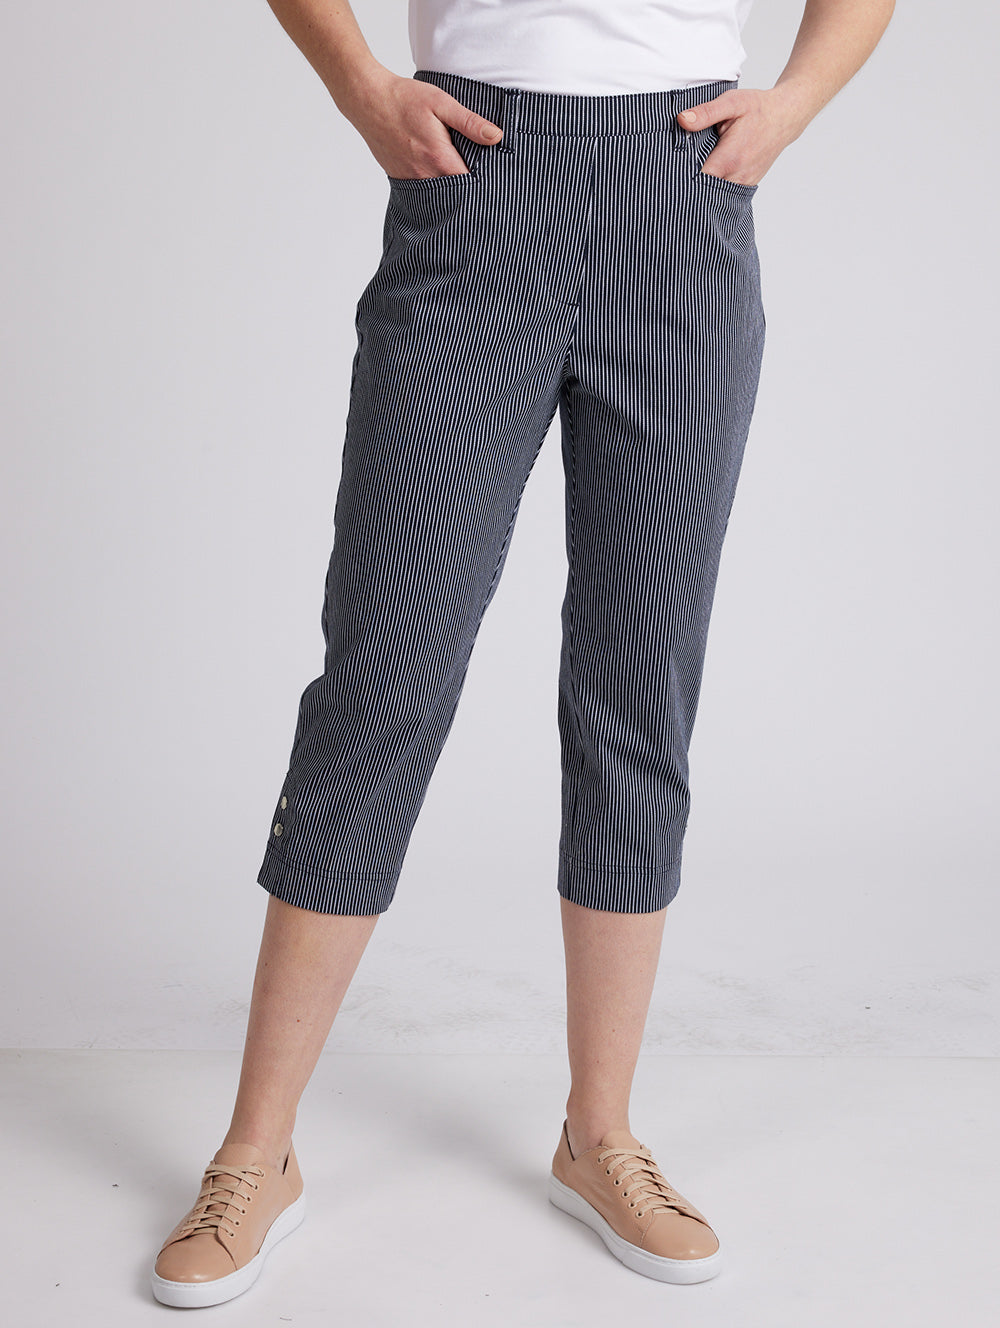 Mens 3/4 Length Cargo Pants Shorts Loose Casual Cotton Trousers Plus Size  Pants | eBay